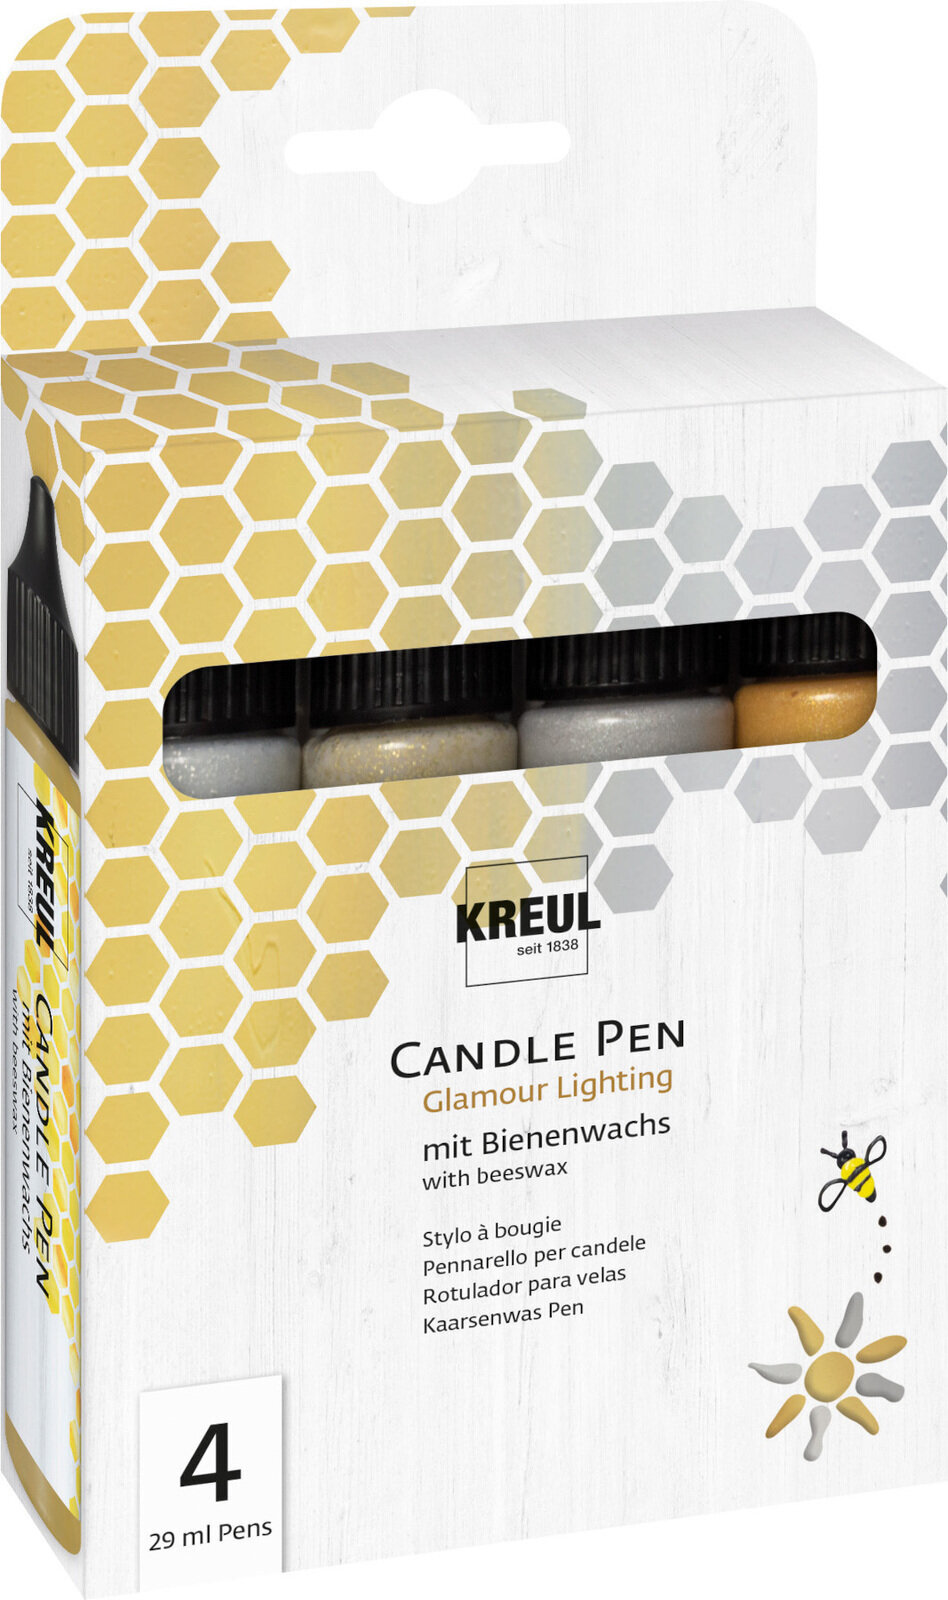 Filctollak Kreul Candle Pen Glamour Lighting Set